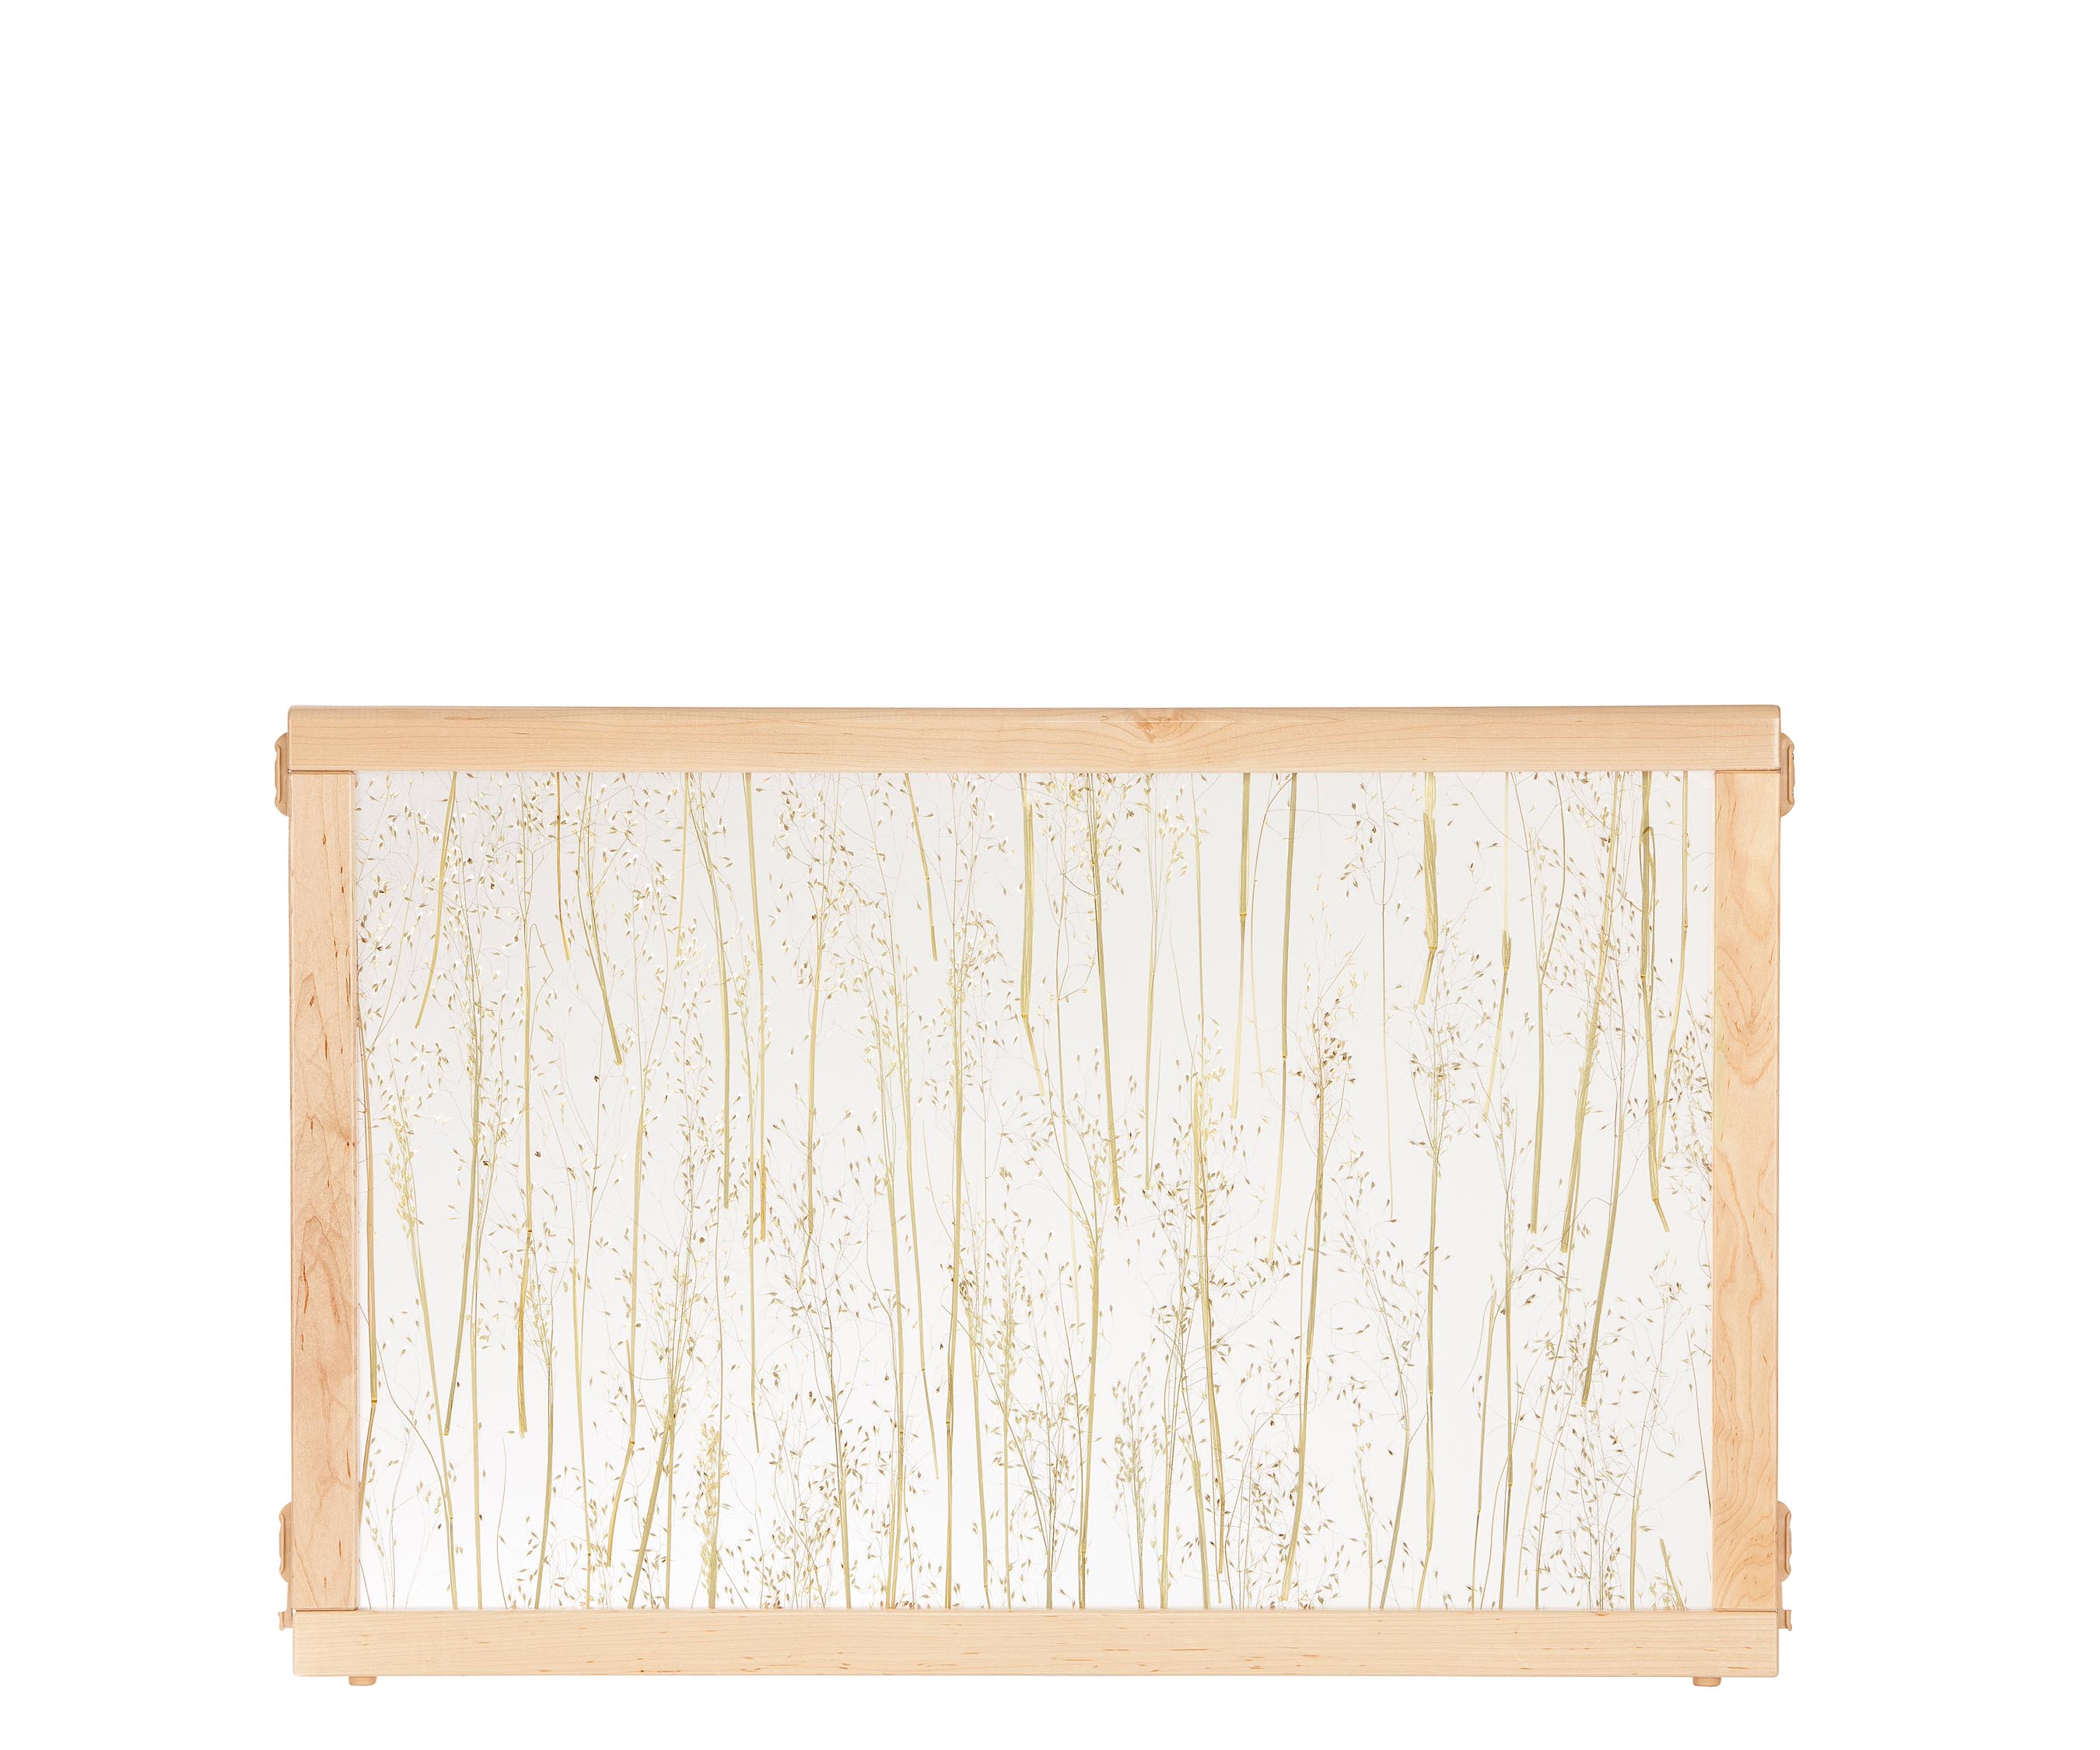 Rice grass panel, 94 x 61 cm